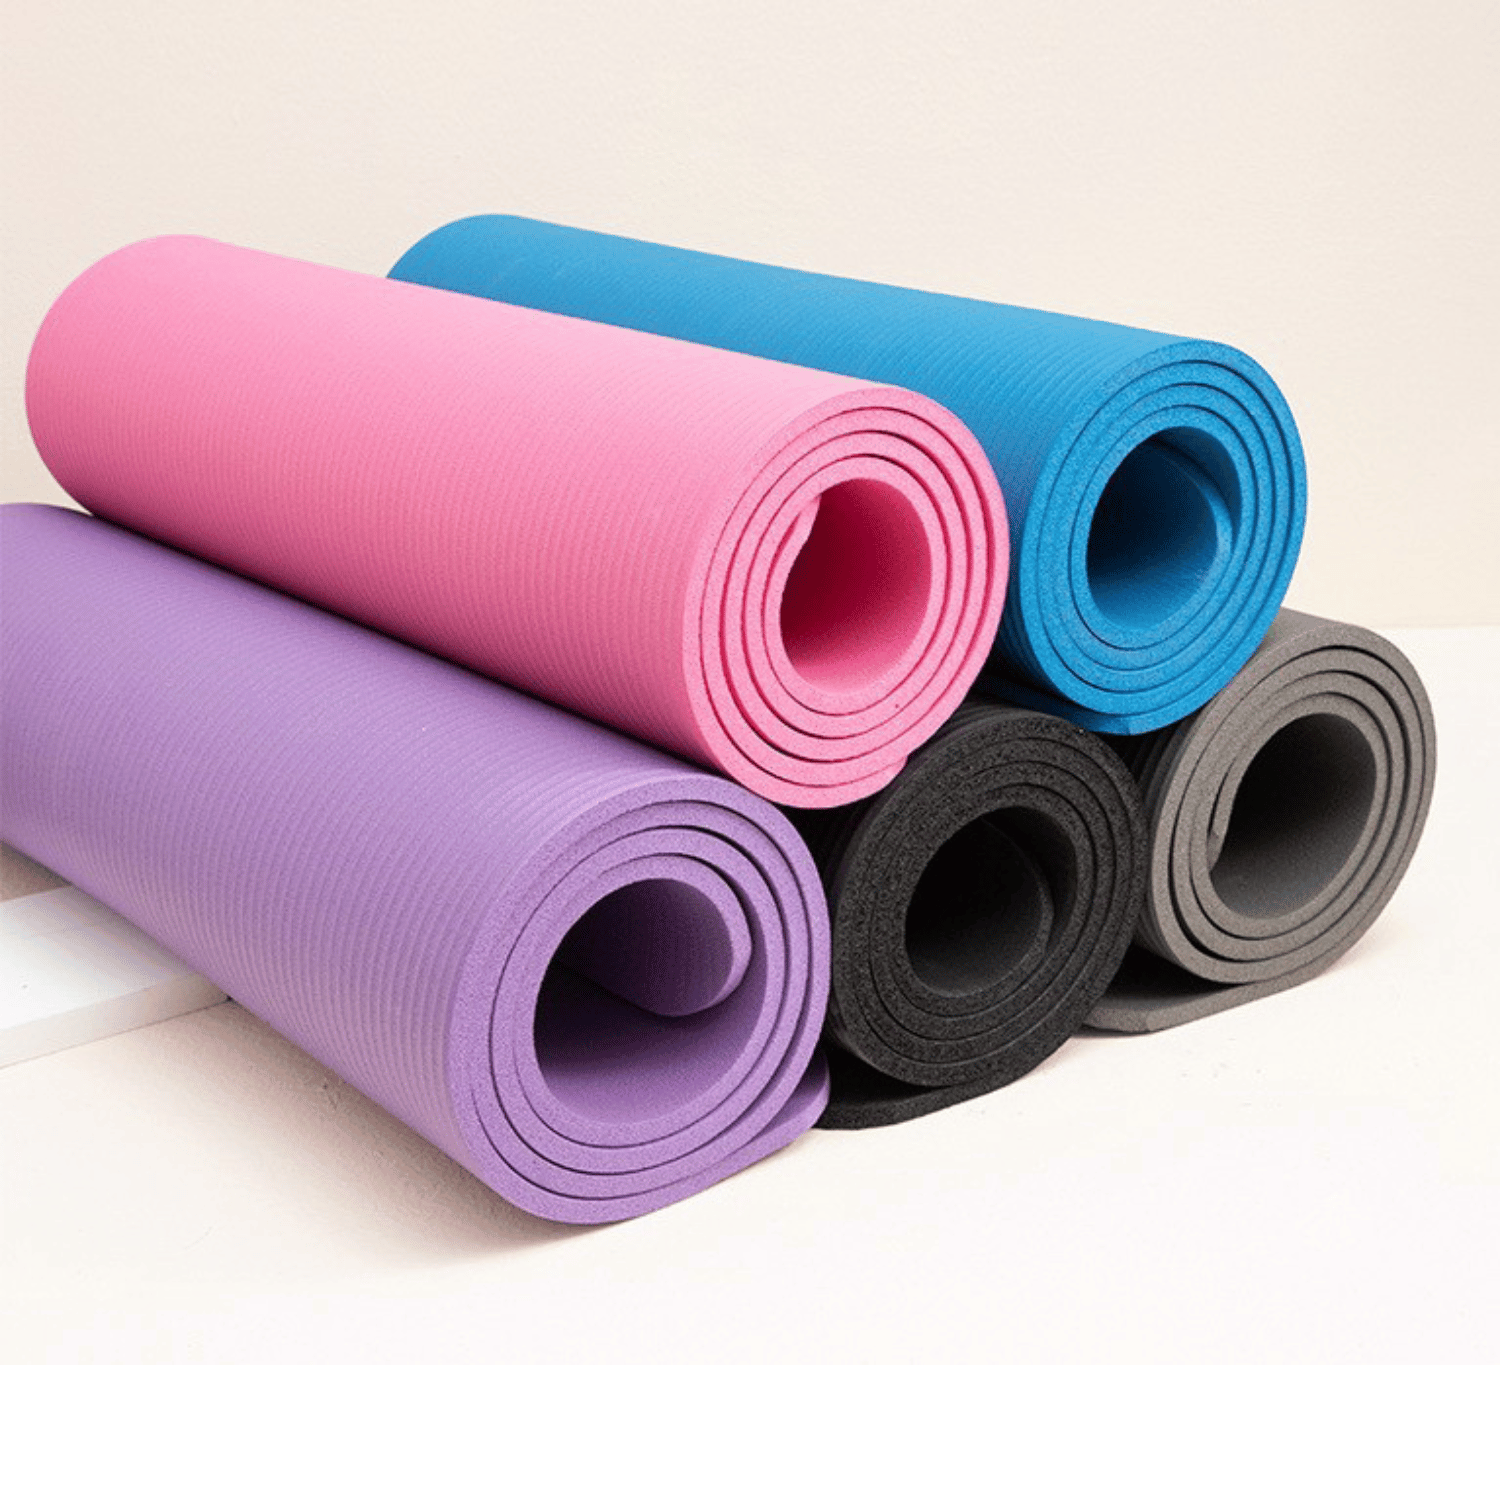 Buy Yoga Mat Storage Rack online